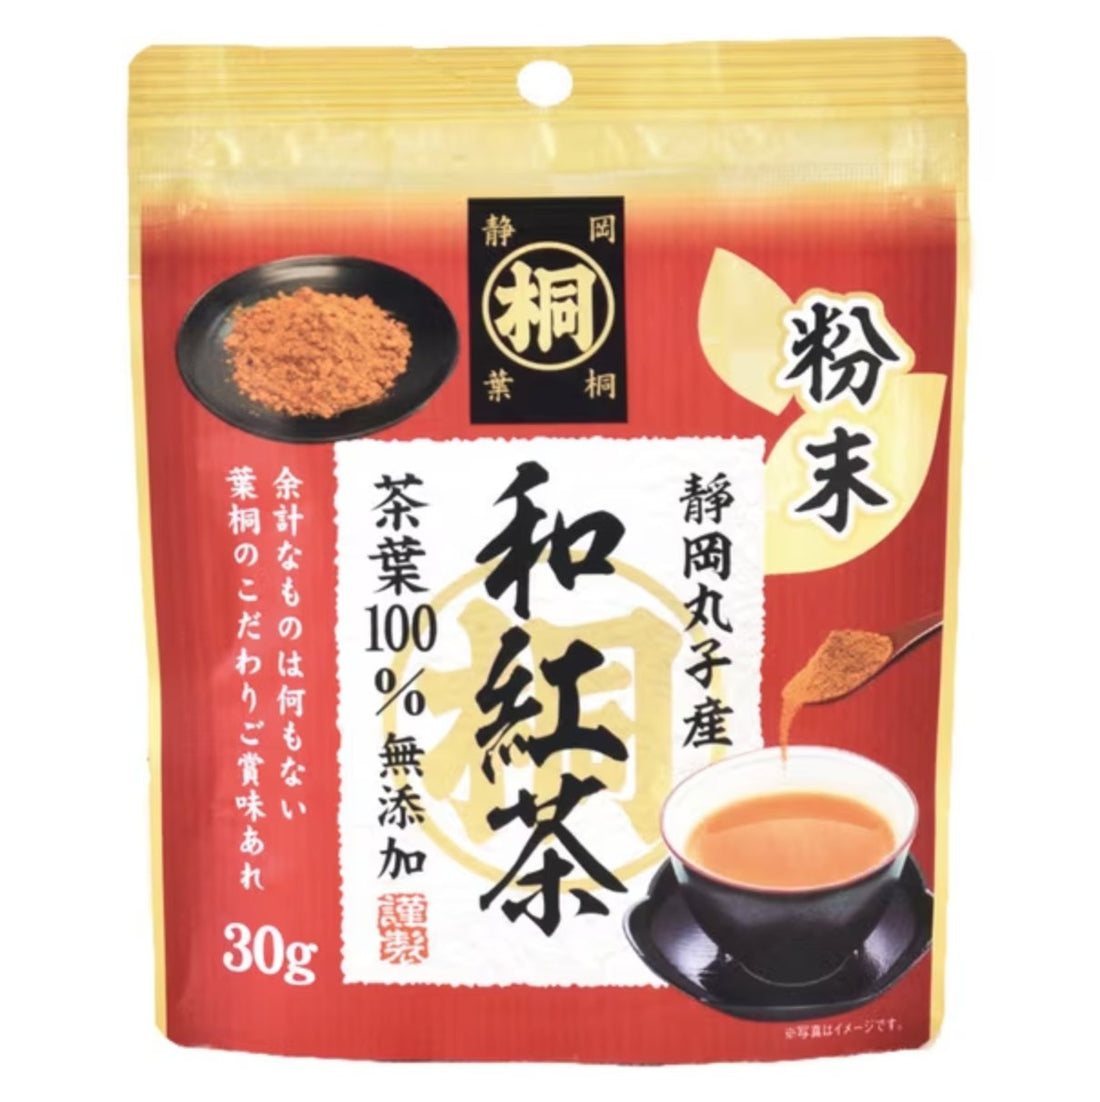 Hagiri Shizuoka Maruko Maruko Powder Japanese Black Tea 30g - NihonMura